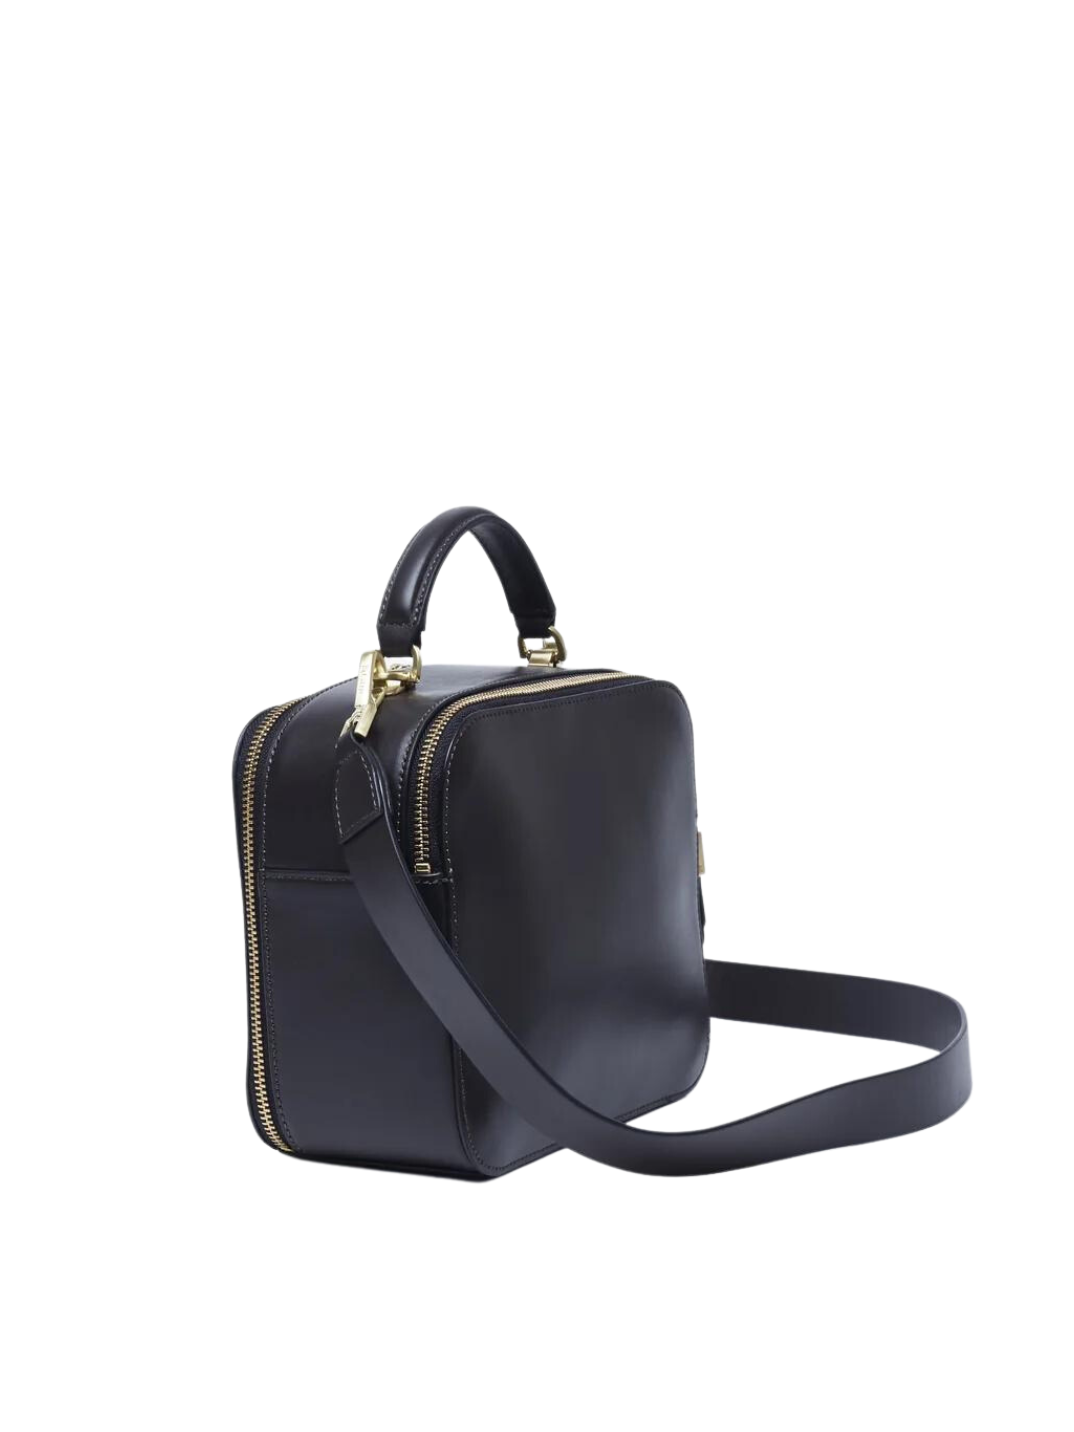 Tibby handbag women's sustainable fashion leather handbag trendy cute elegant female accessories